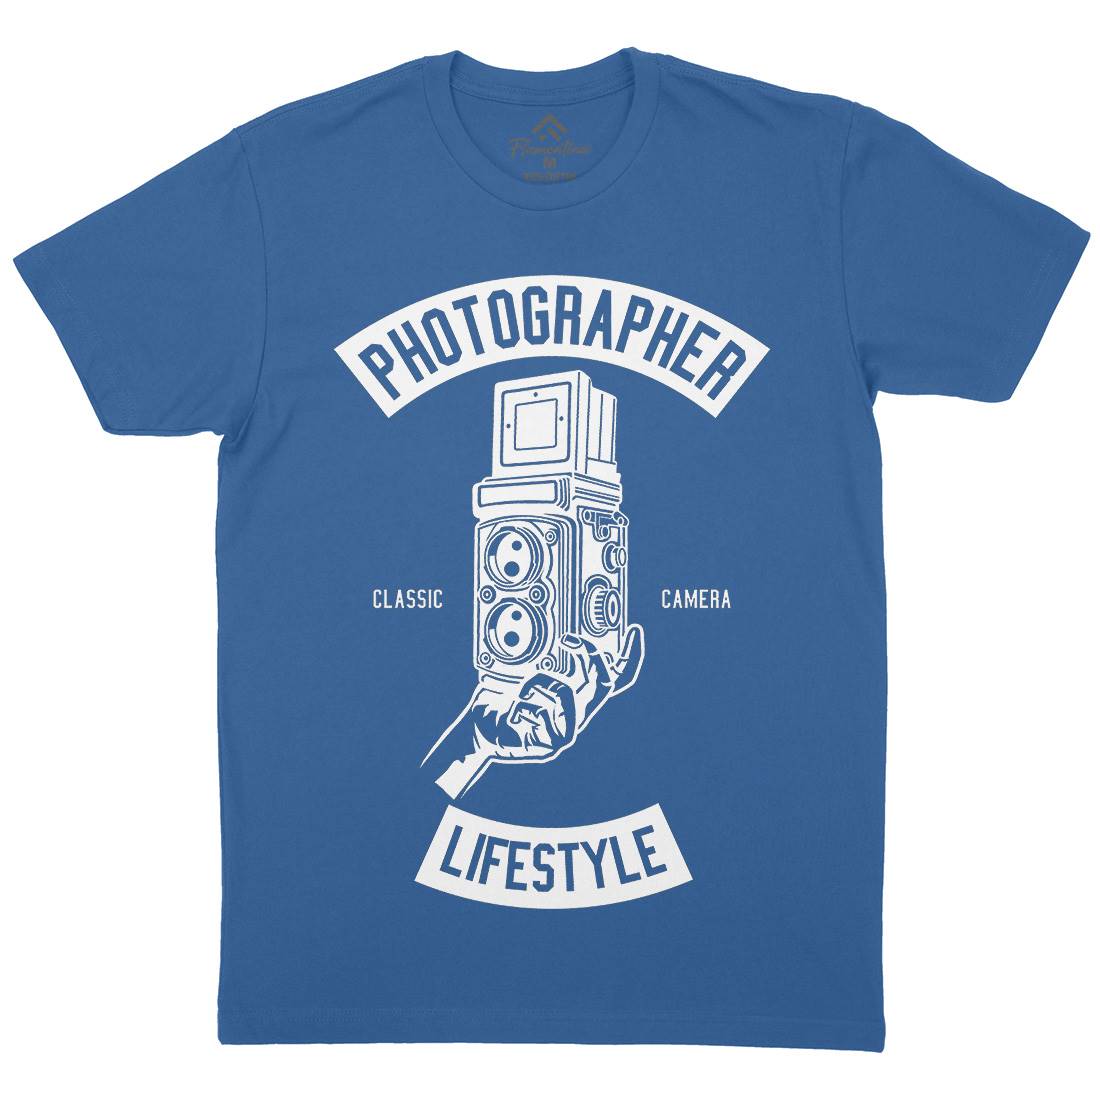 Photographer Lifestyle Mens Organic Crew Neck T-Shirt Media B597